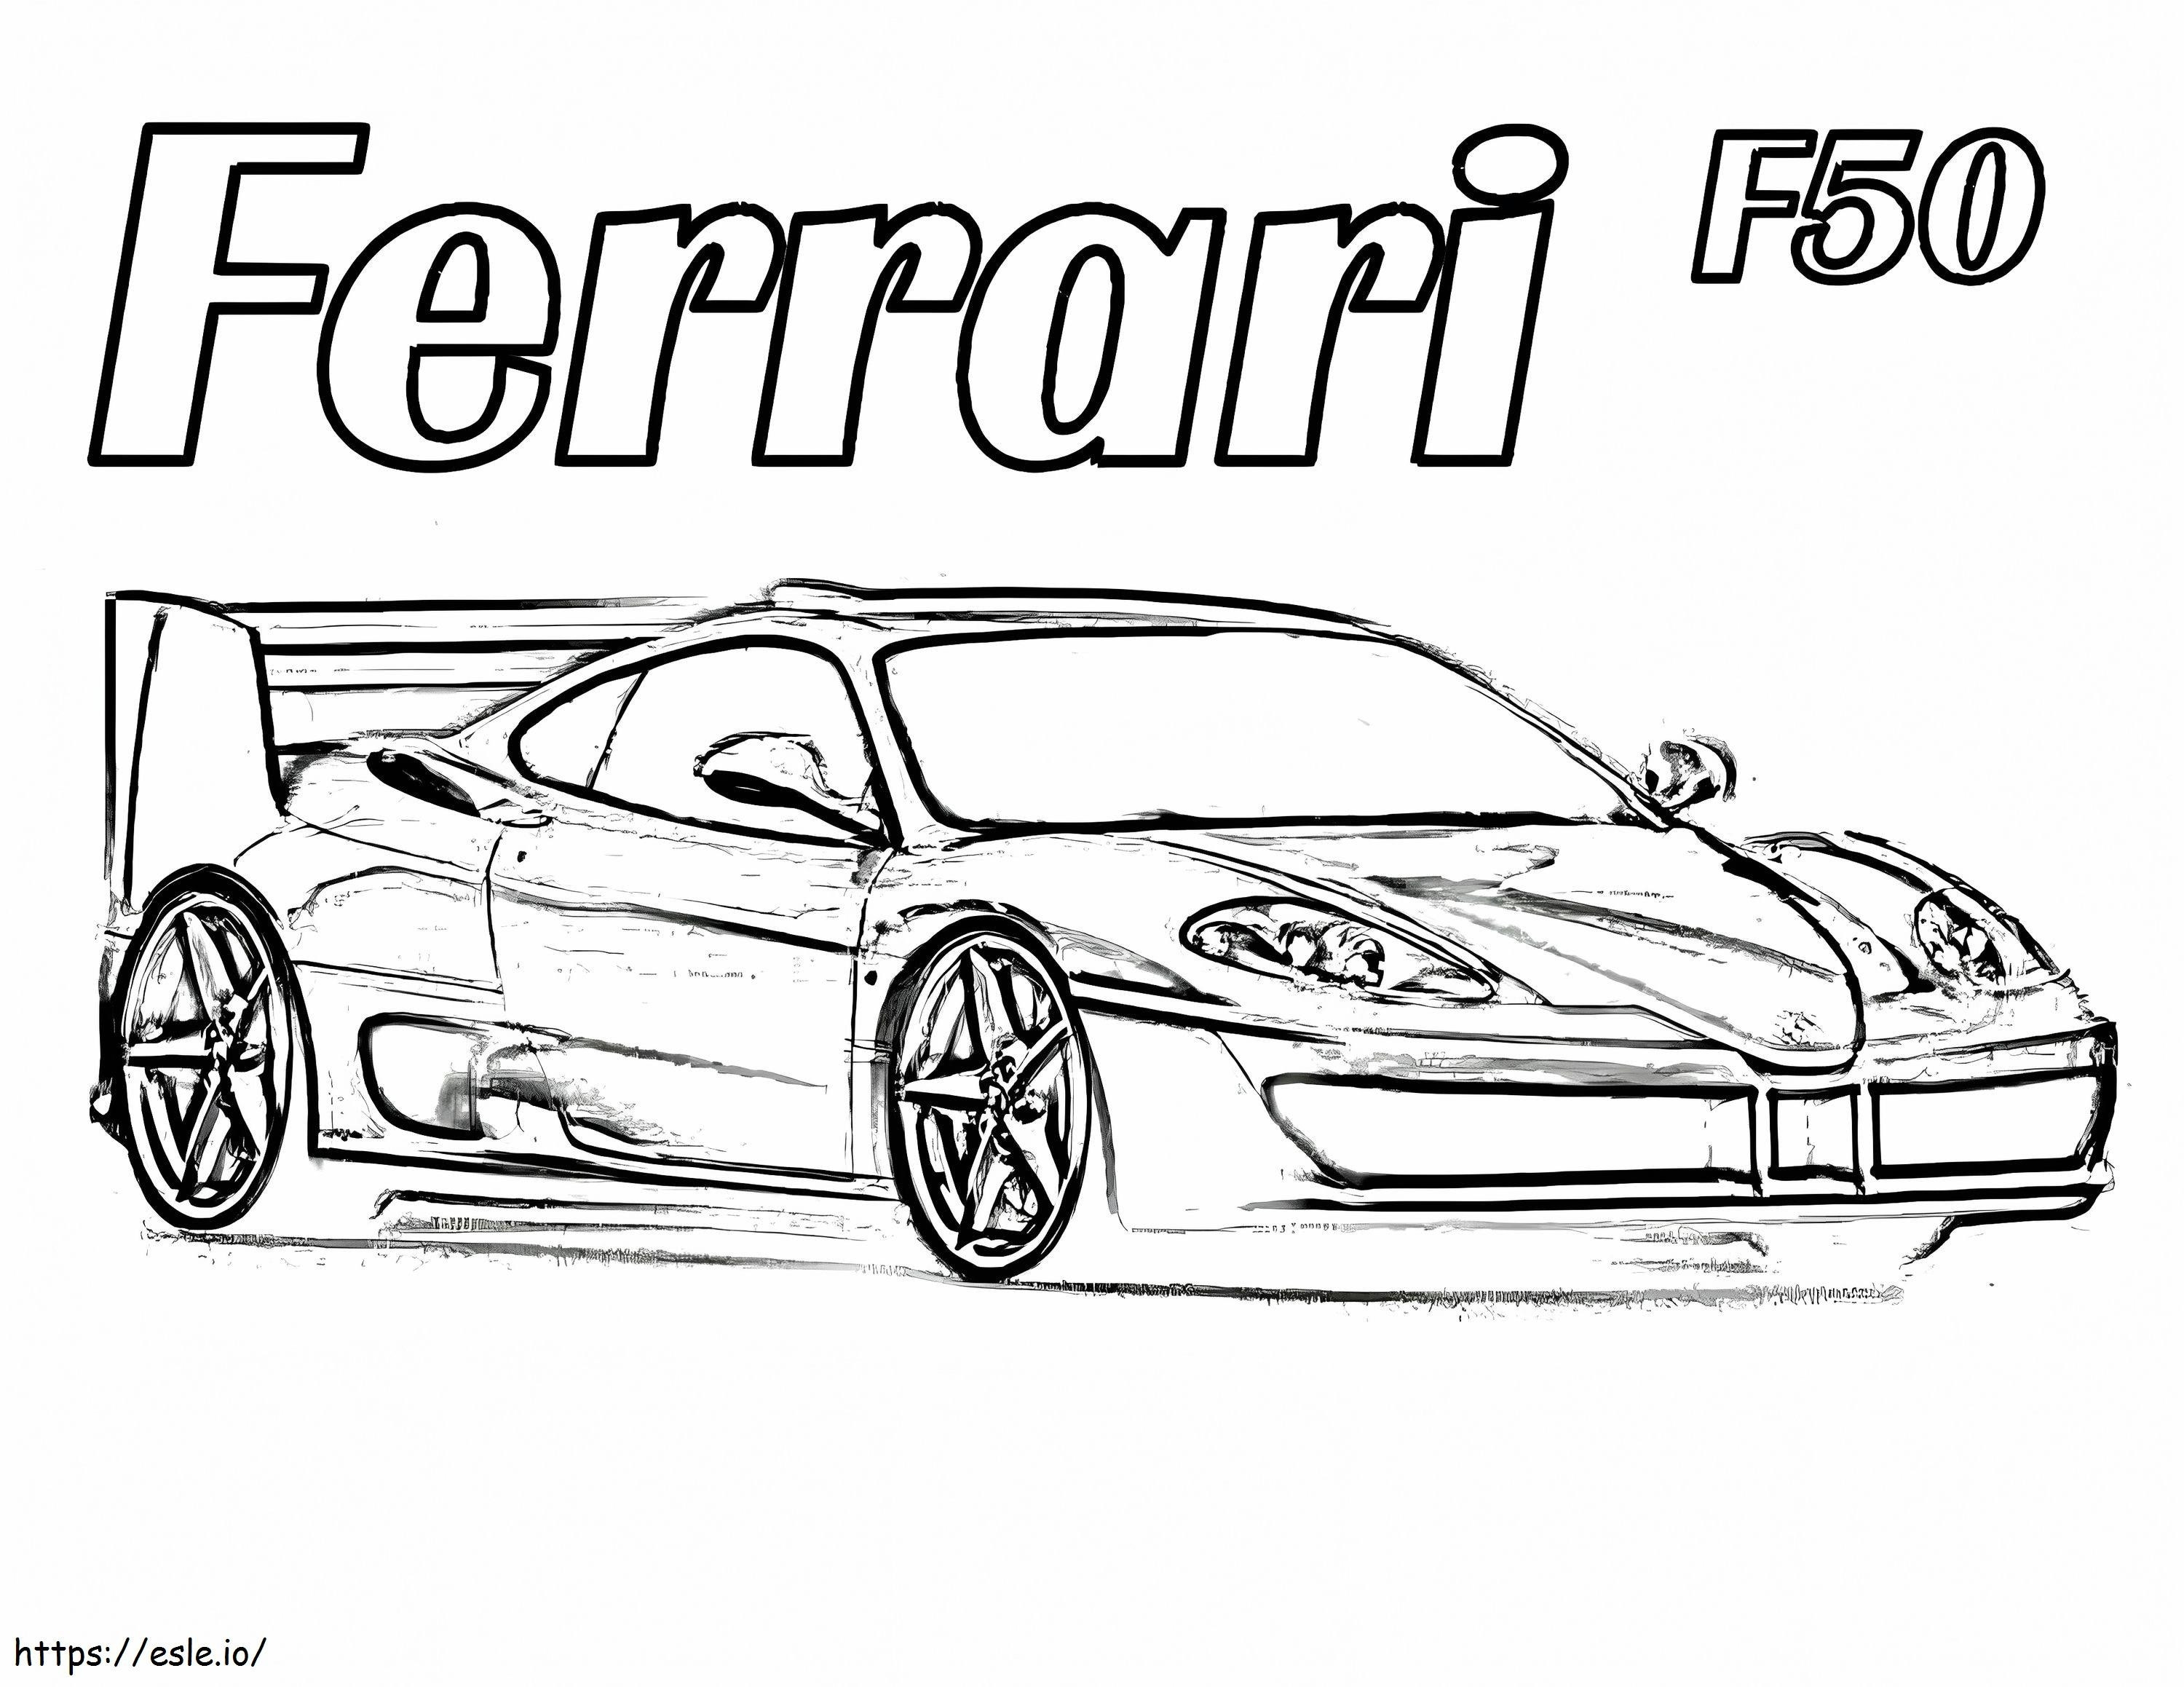 Coloriage Ferrari F50 à imprimer dessin